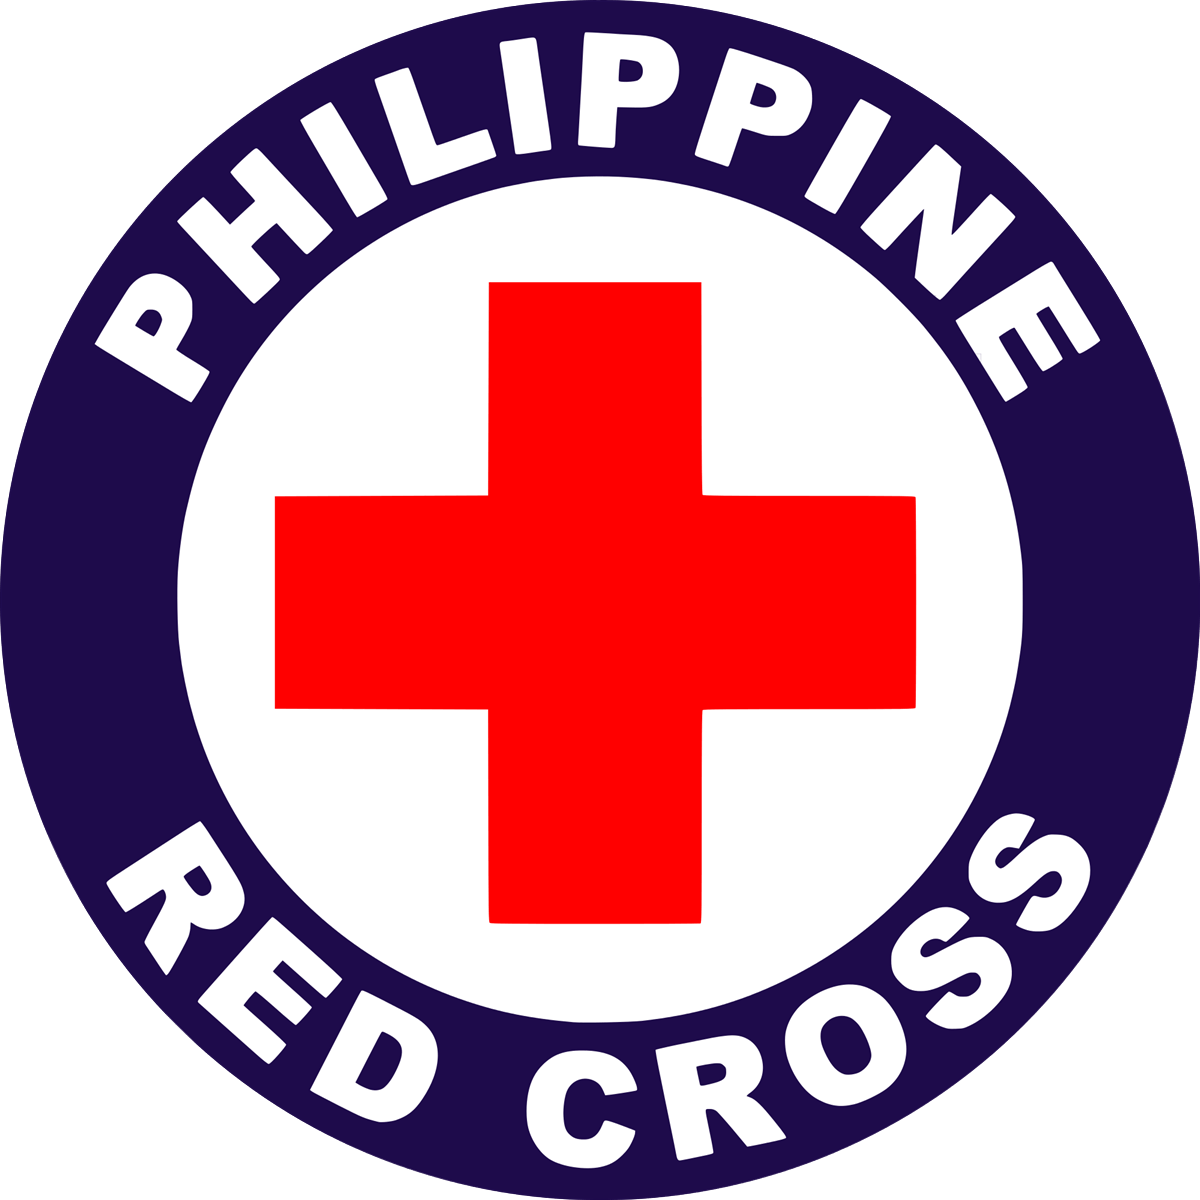 Red Cross Company Logo - Philippine Red Cross | ContactCenterWorld.com